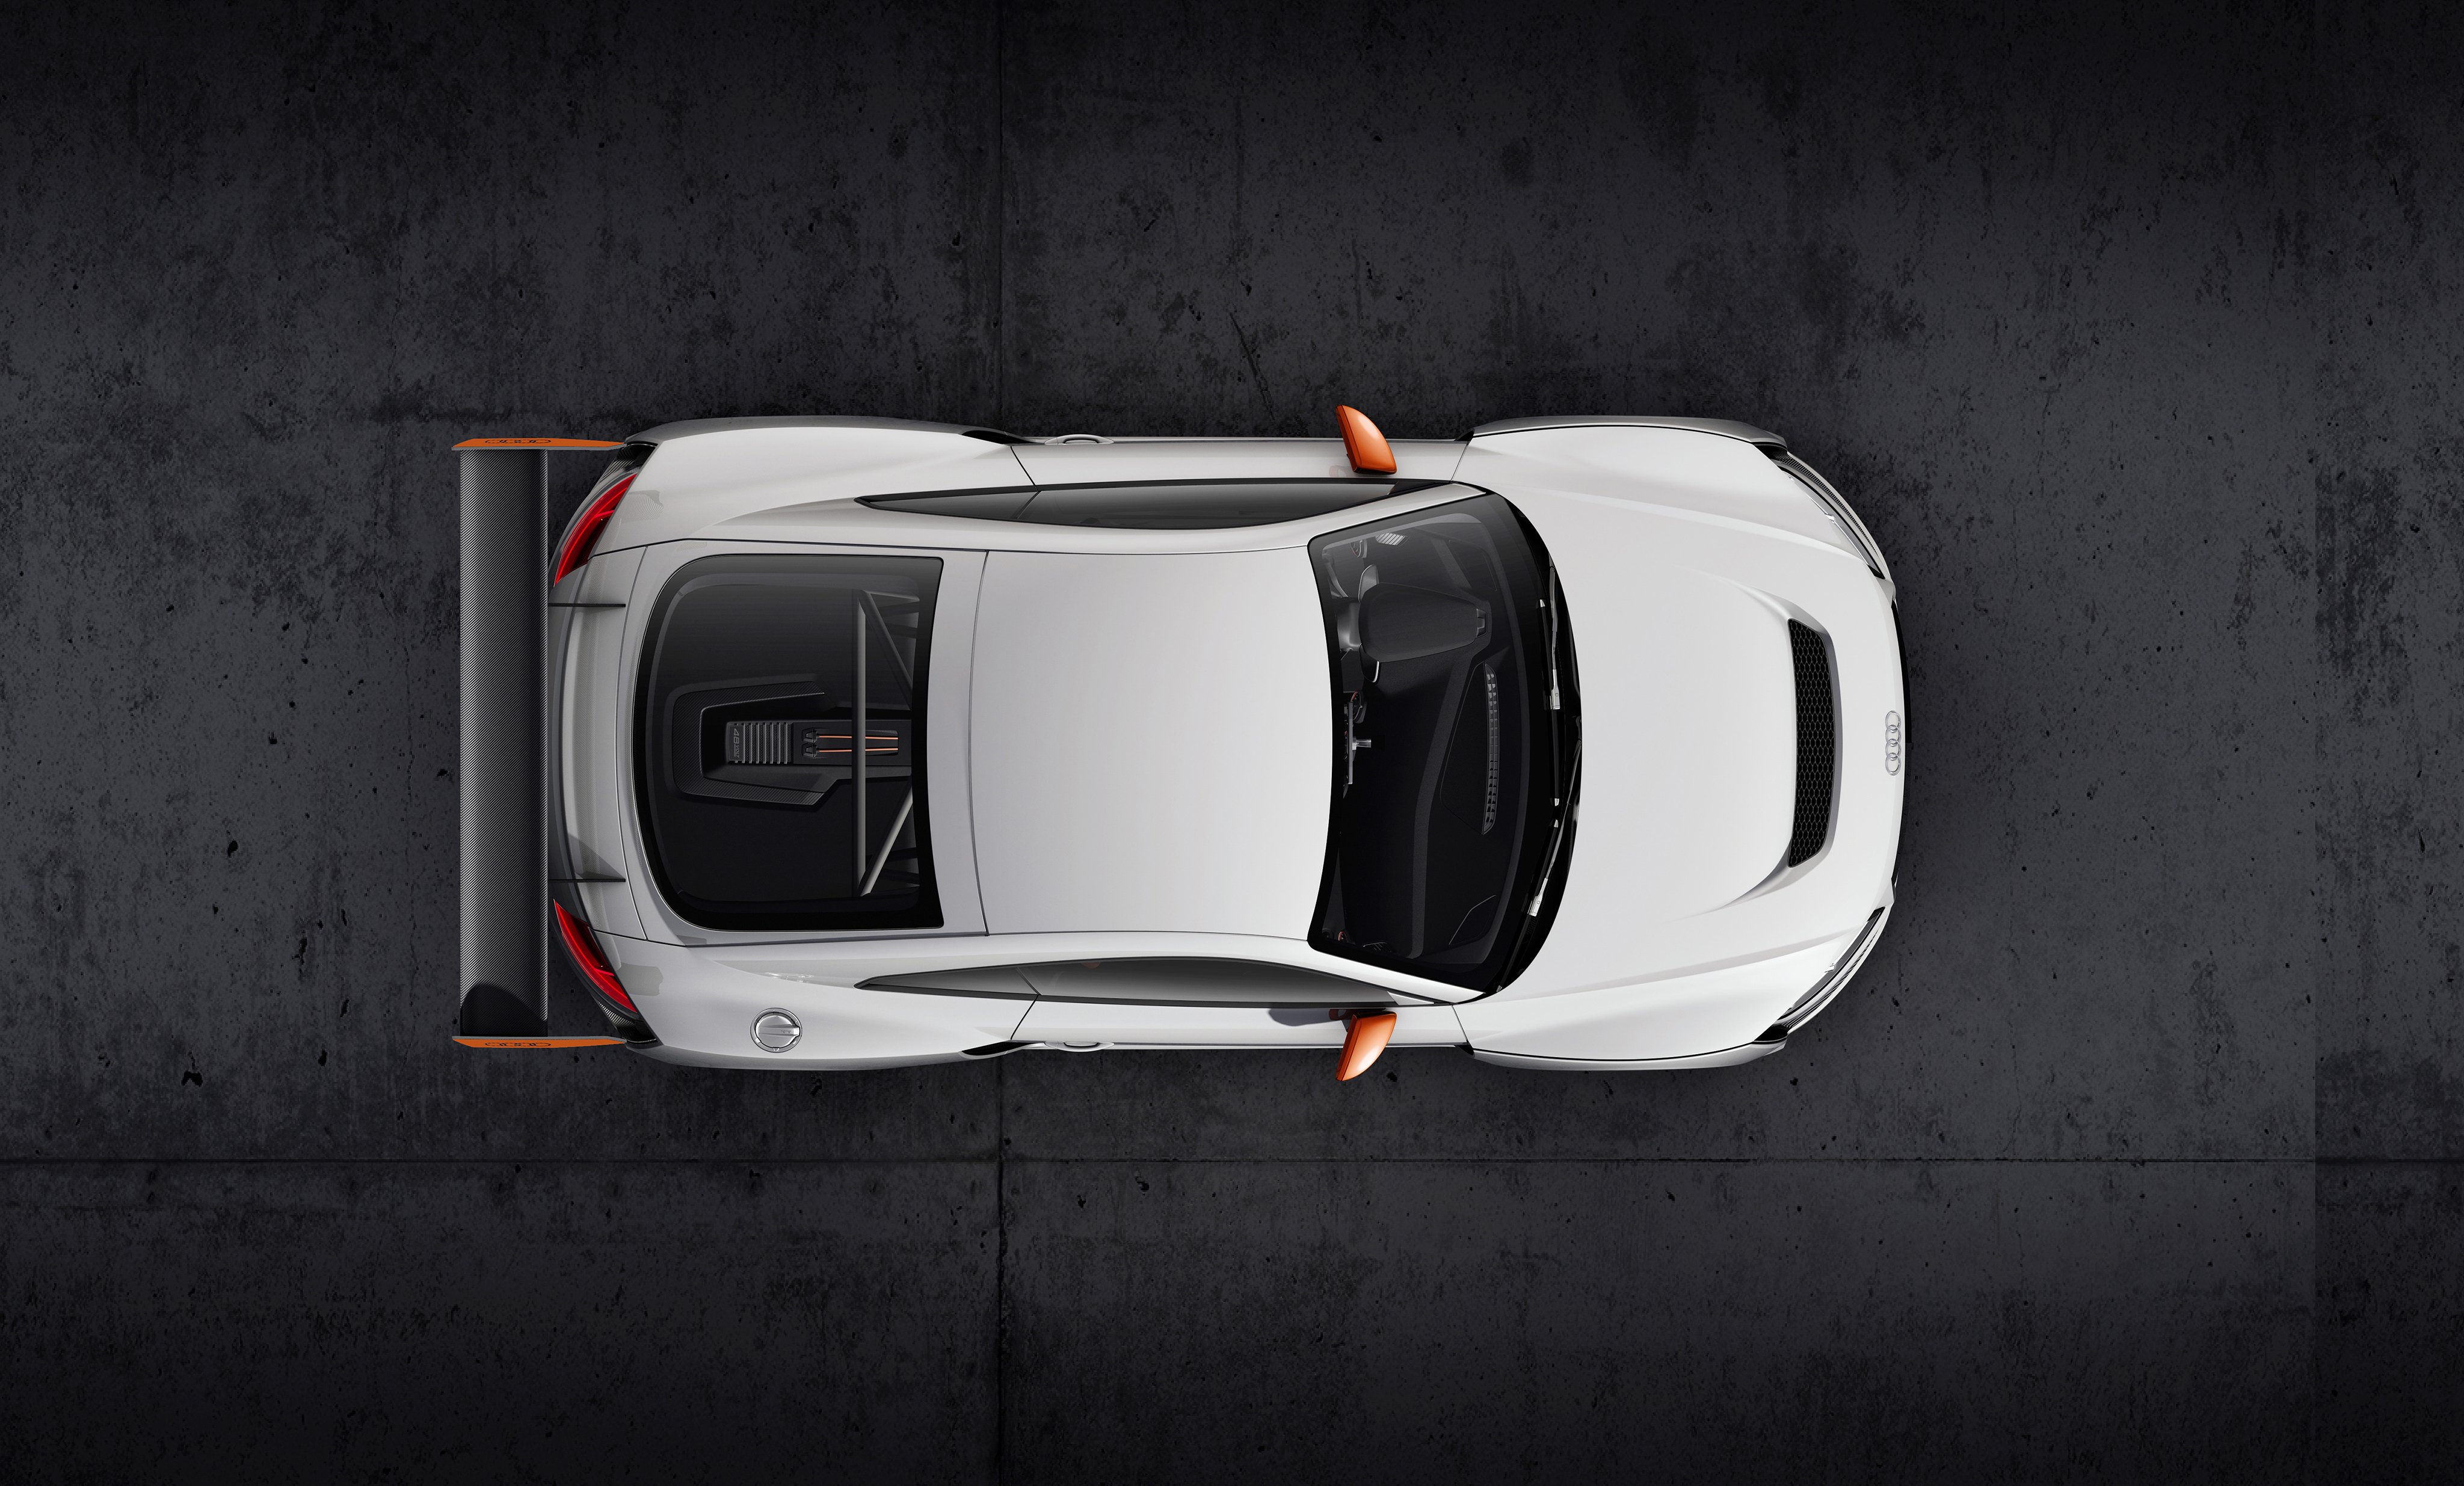 2016, Audi, T t, Clubsport, Turbo, Concept, 8 s, Supercar Wallpaper